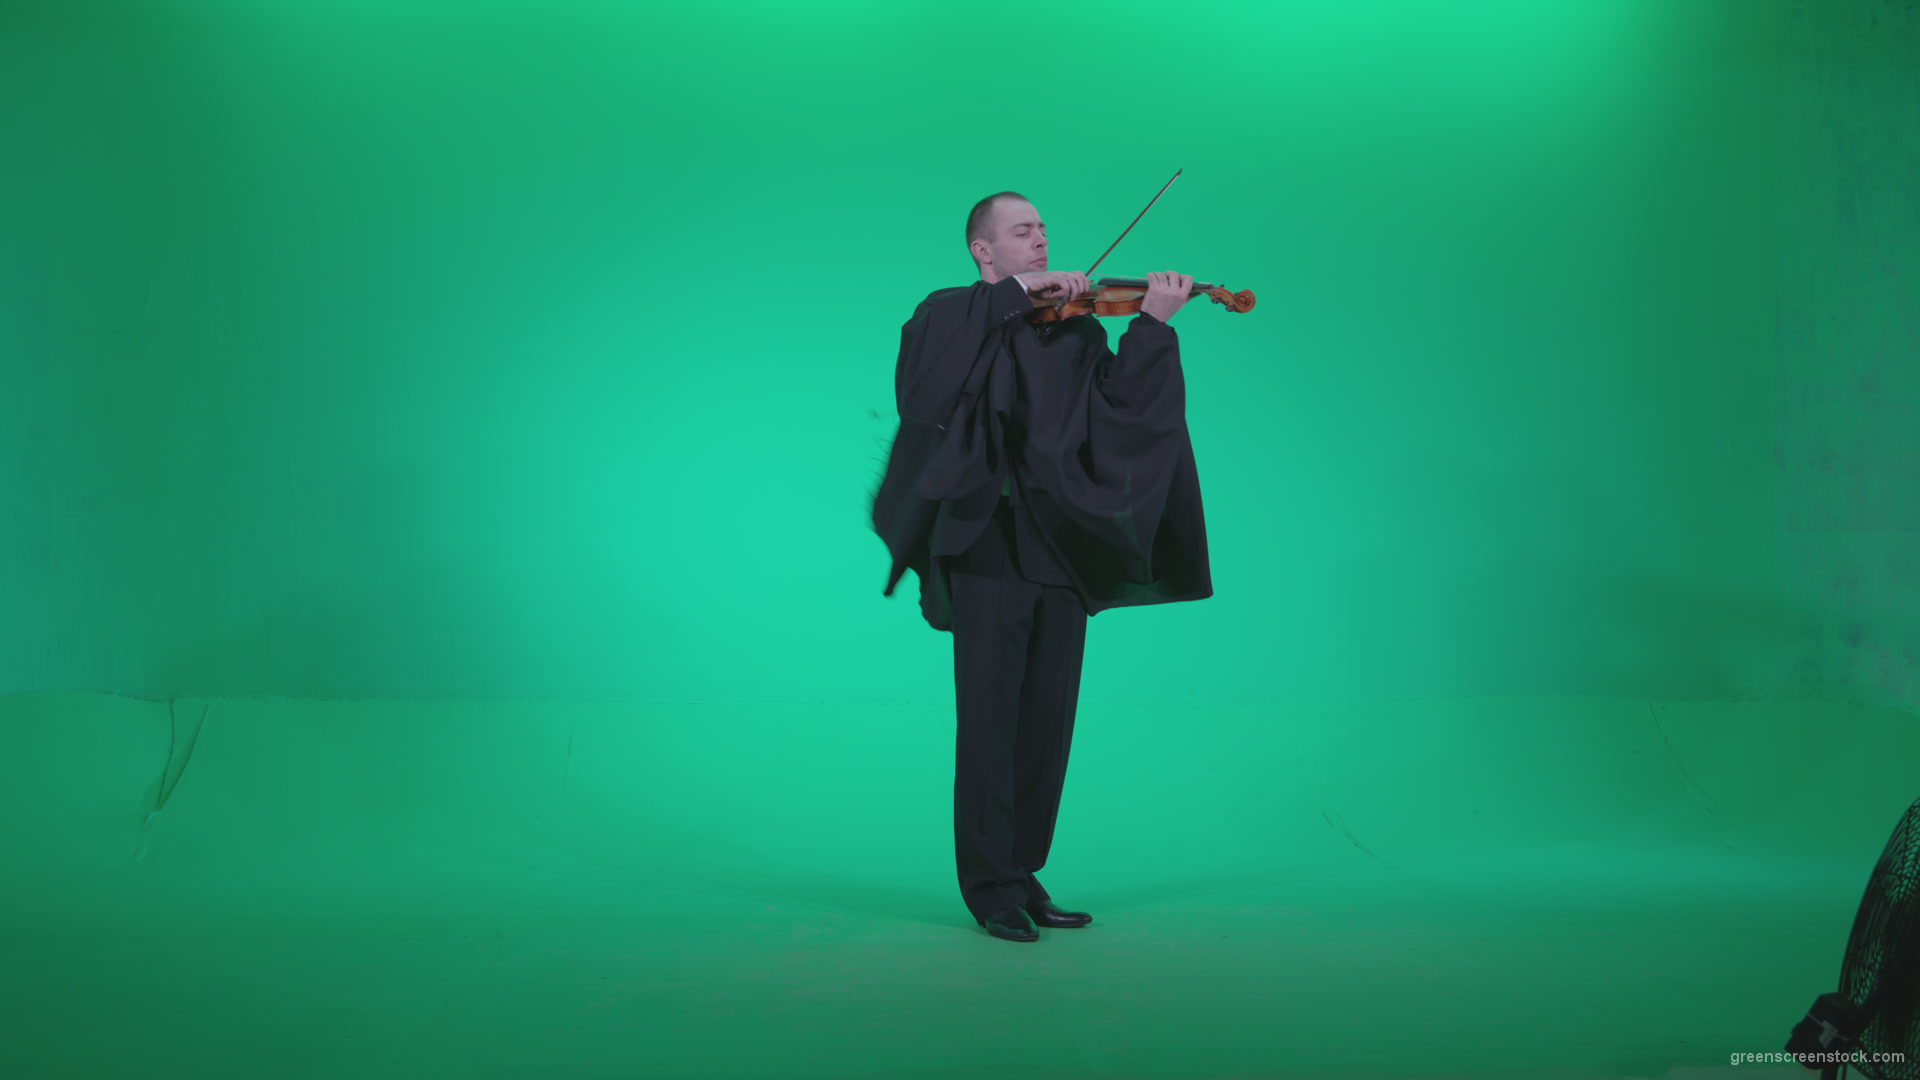 Professional-Violin-player-man-z4_007 Green Screen Stock